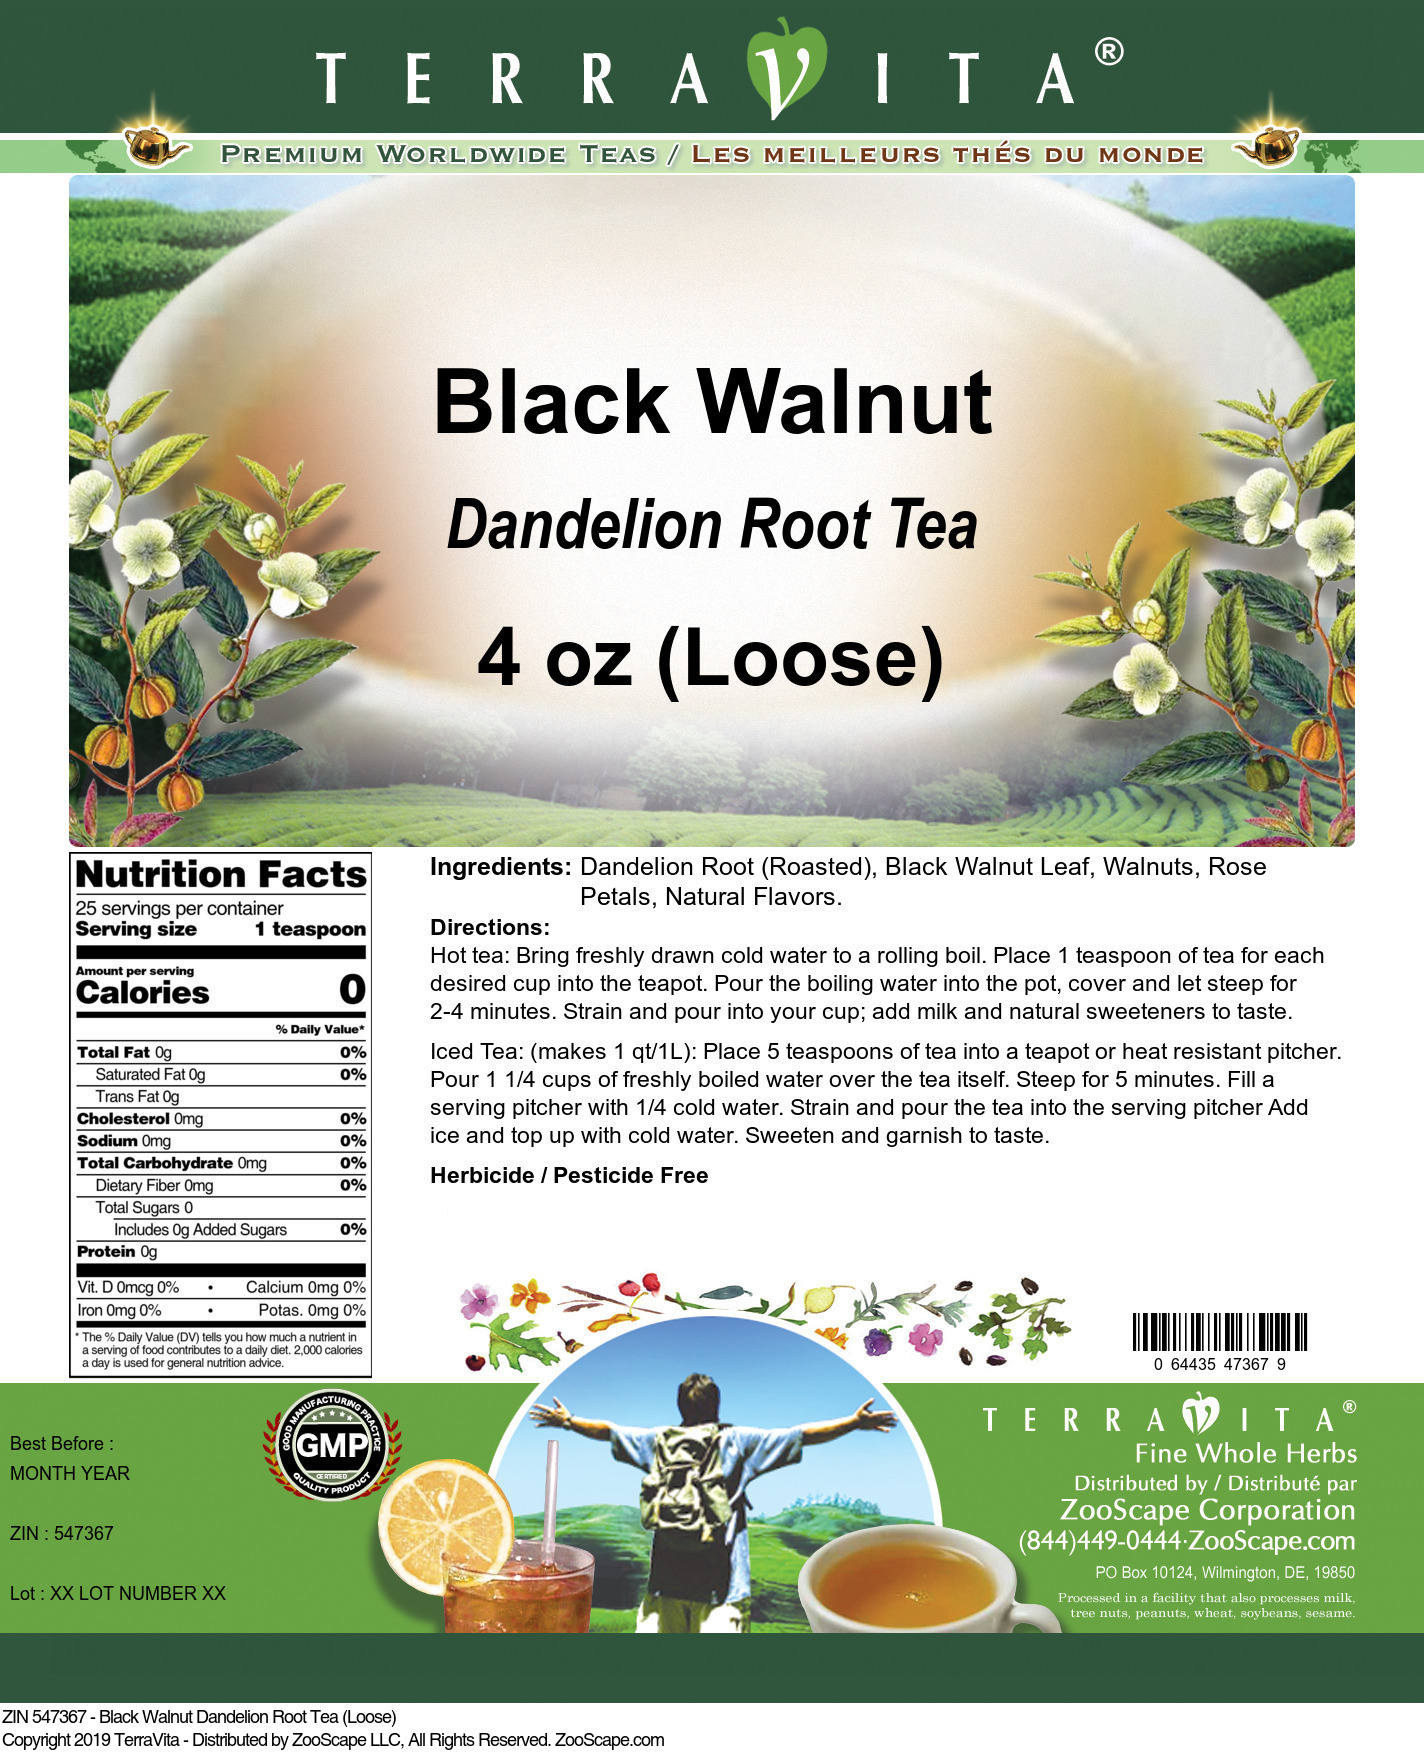 Black Walnut Dandelion Root Tea (Loose) - Label